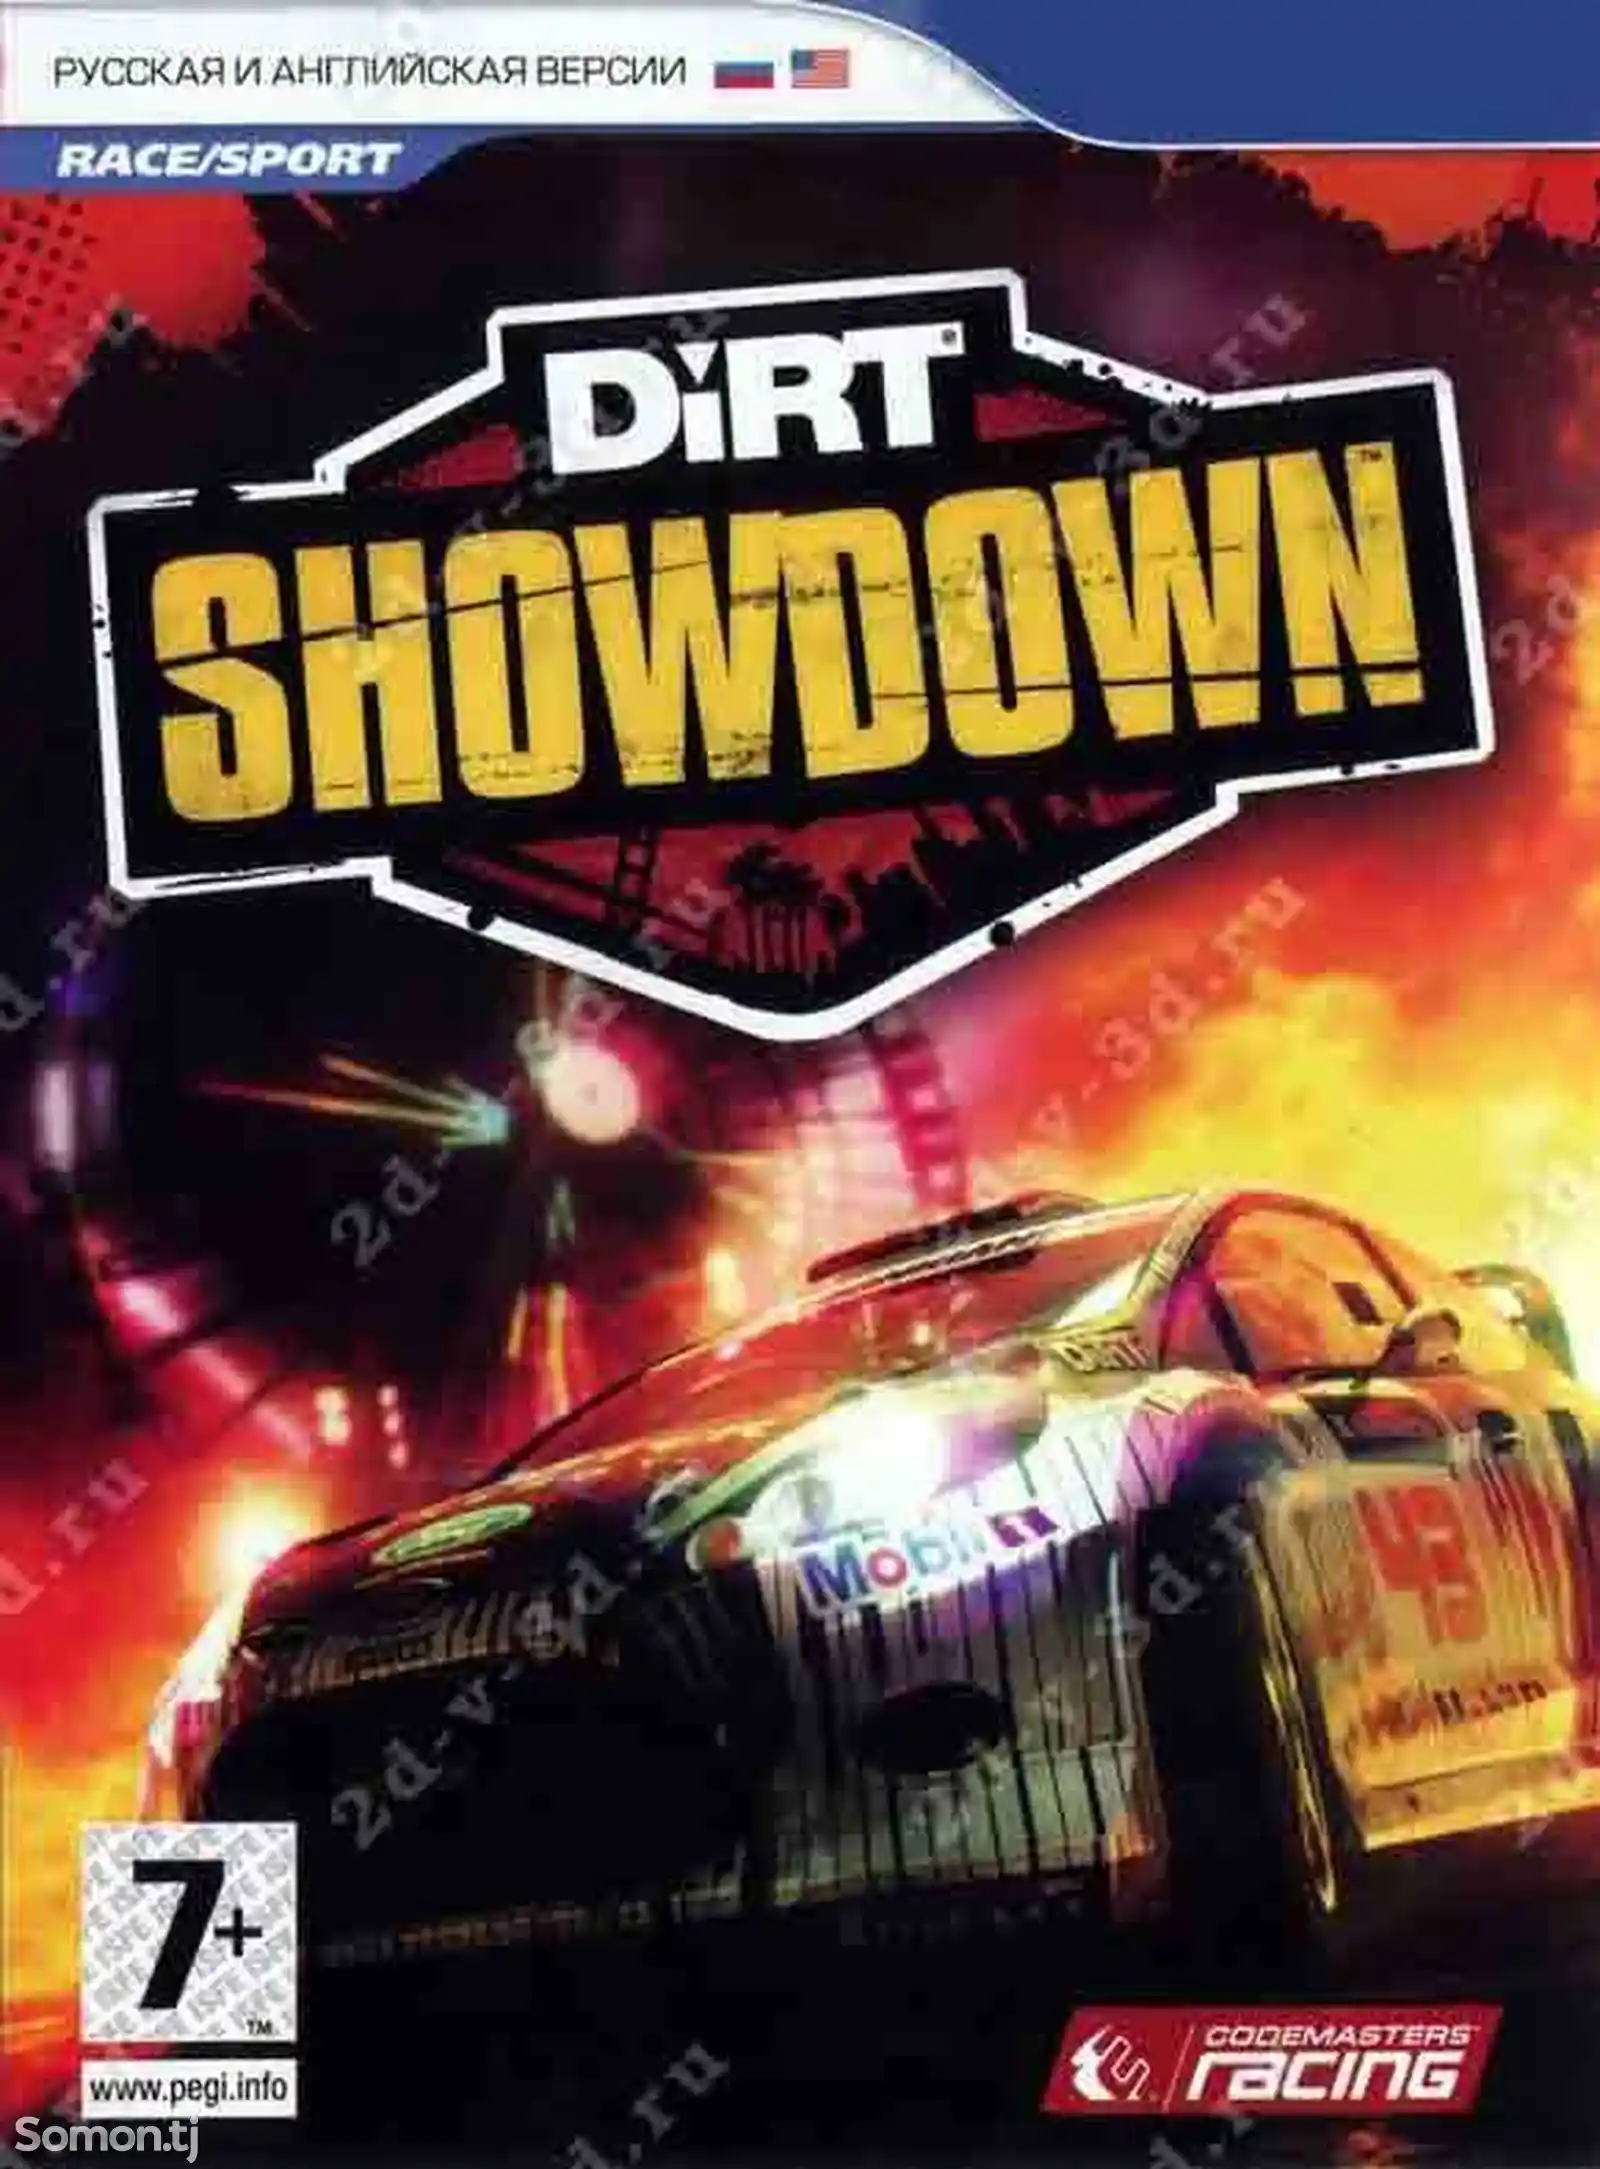 Игра Dirt Showdown на всех моделей Play Station-3